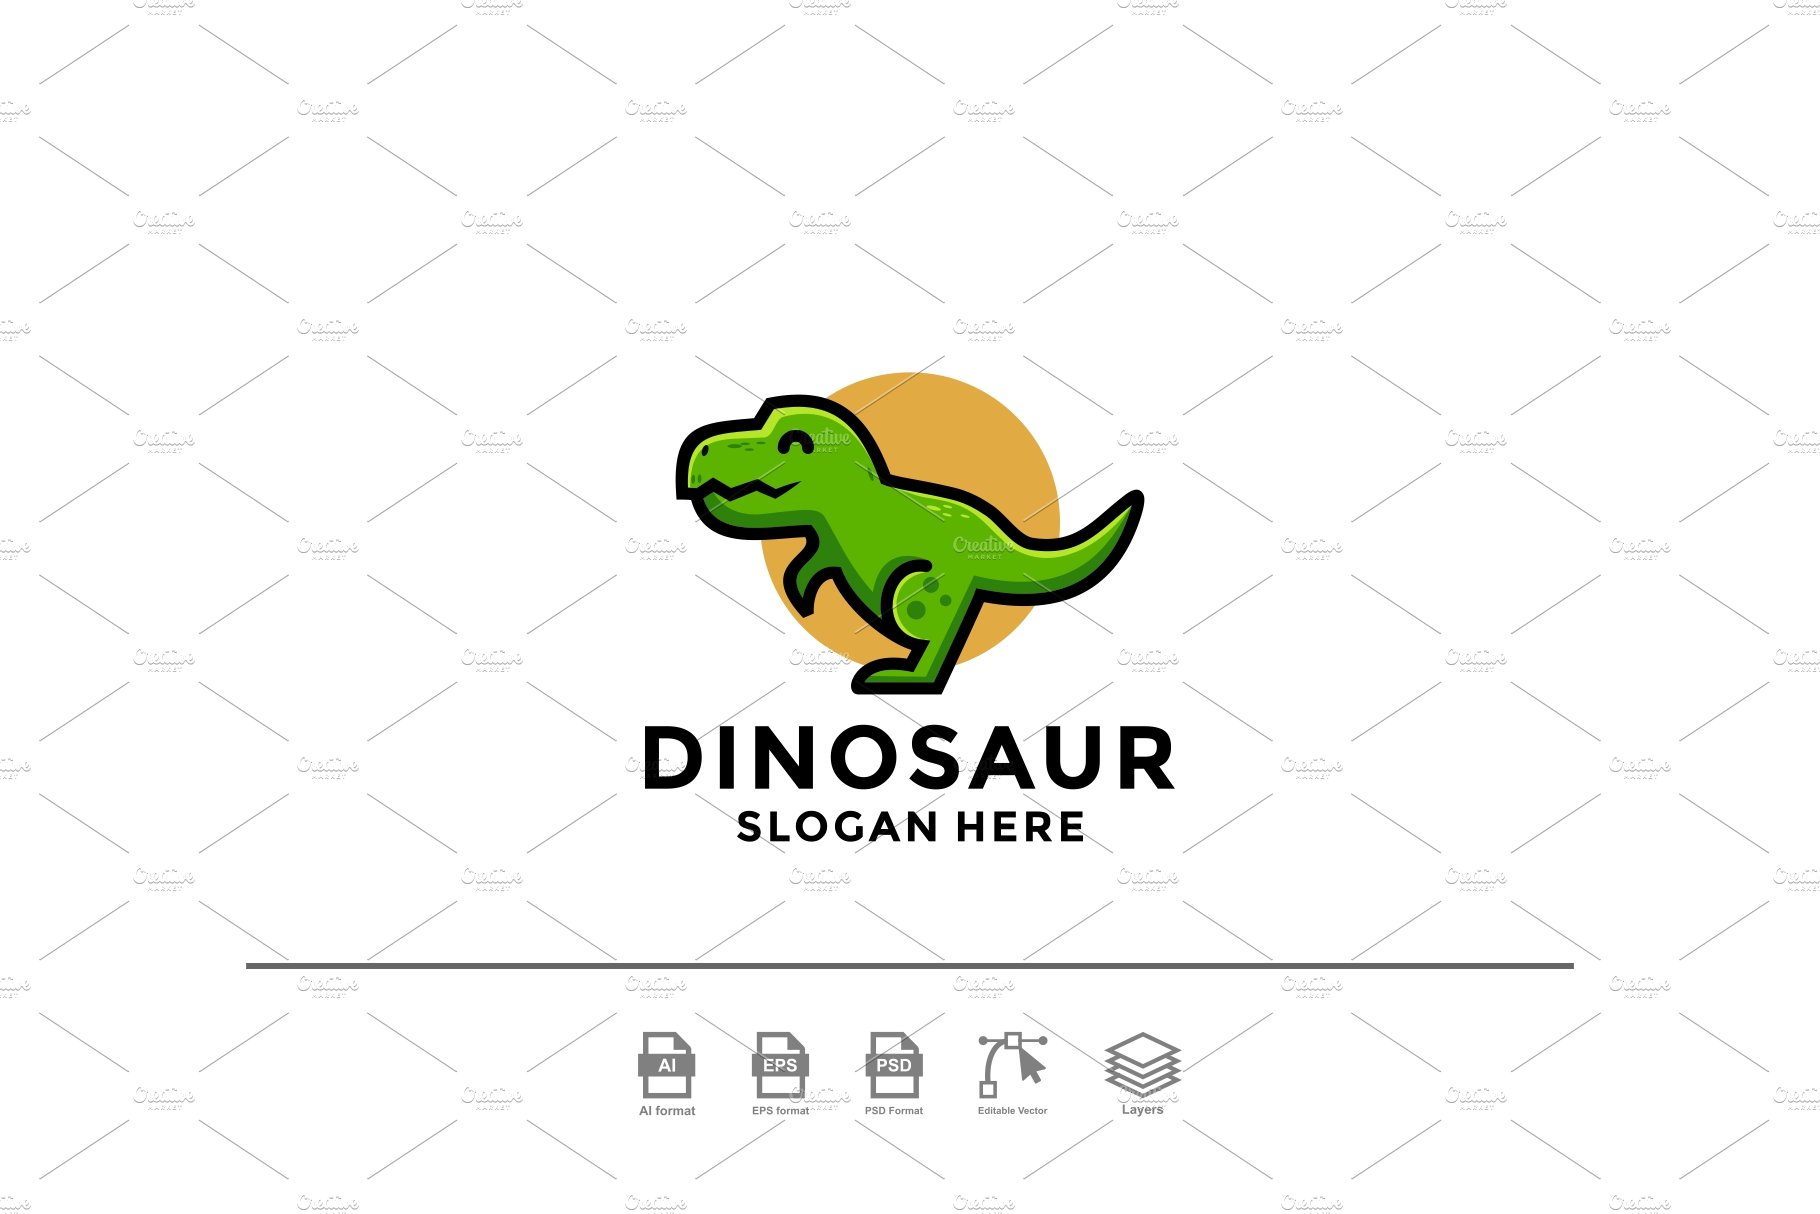 Dinosaur logo character cover image.